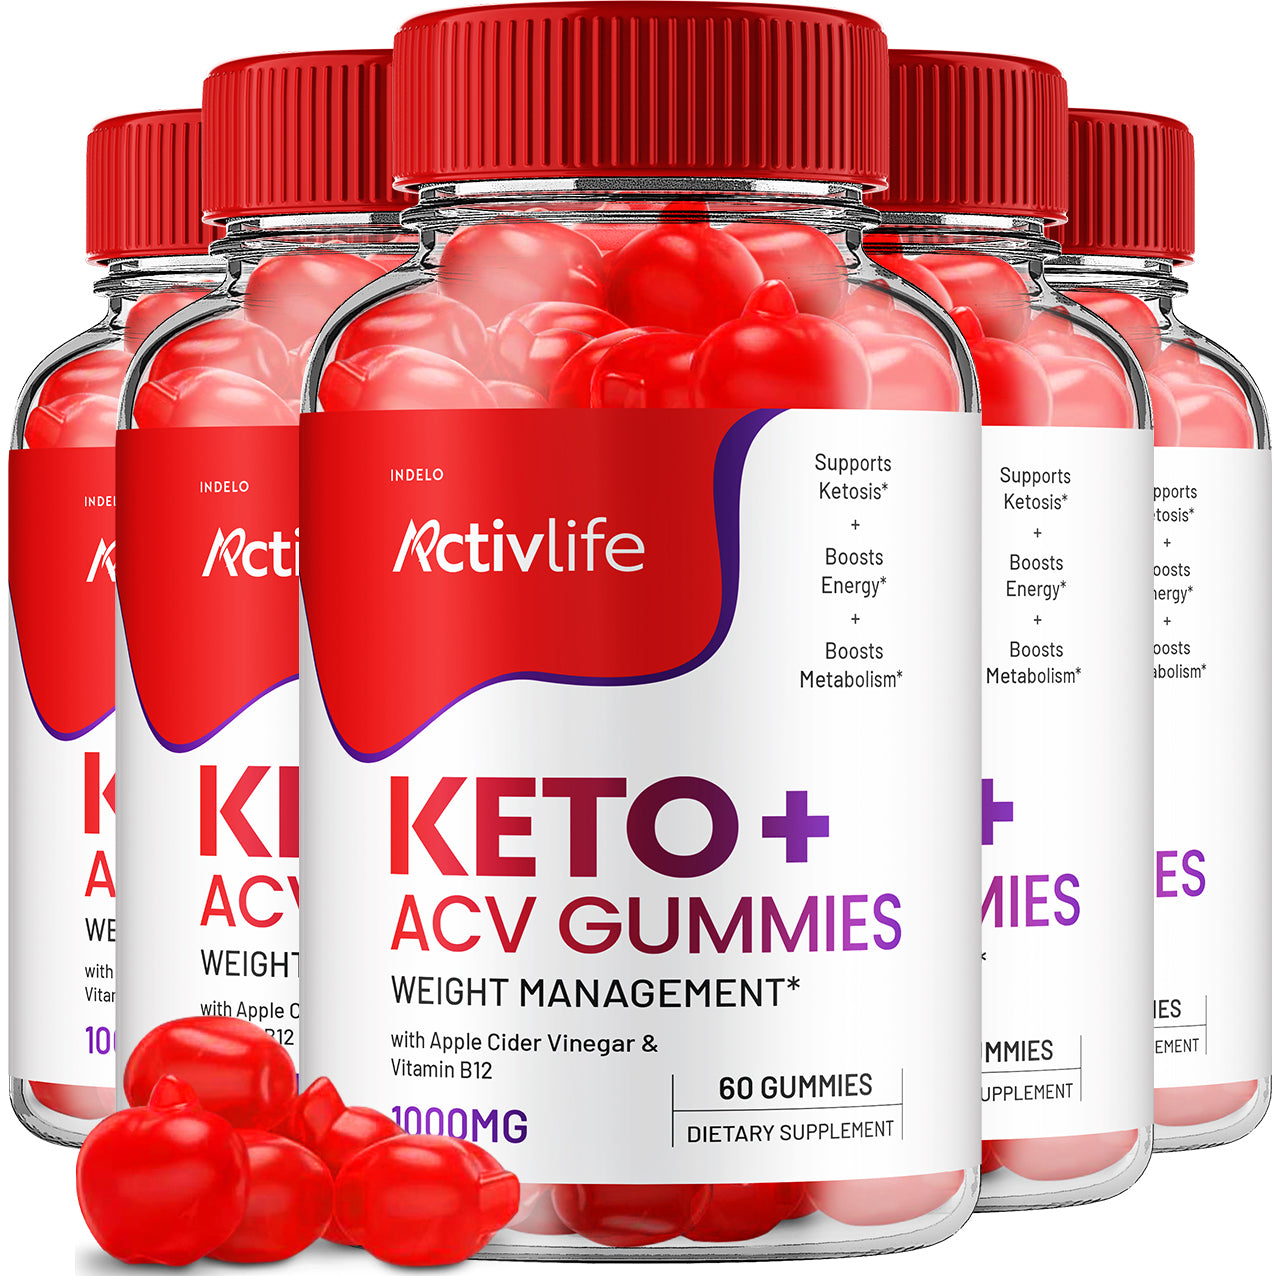 ActivLife ACV Keto Gummies